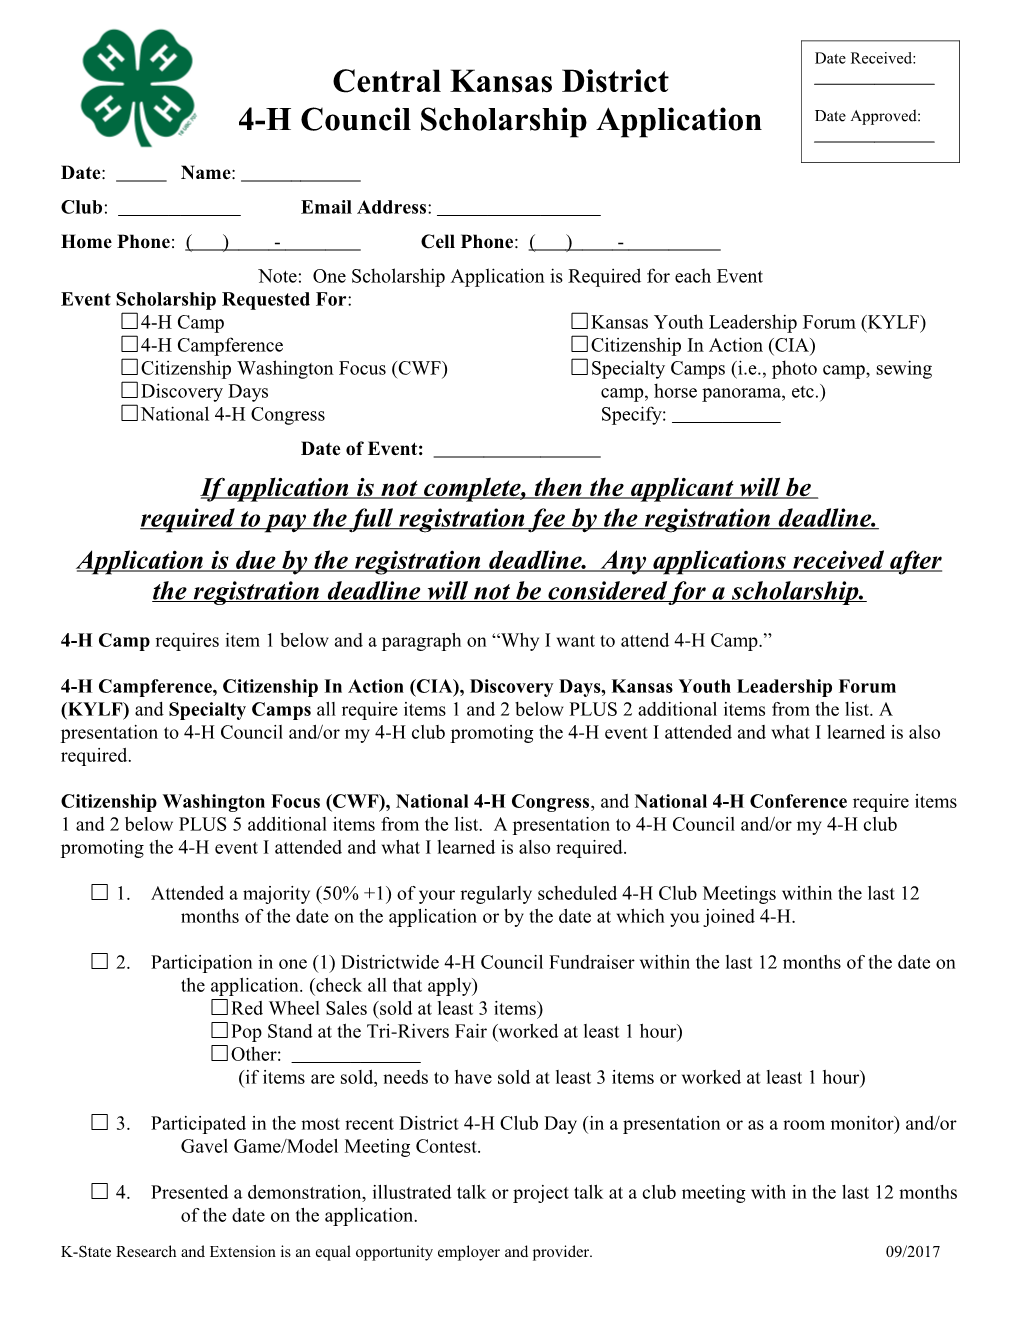 4-H Council Scholarship Application